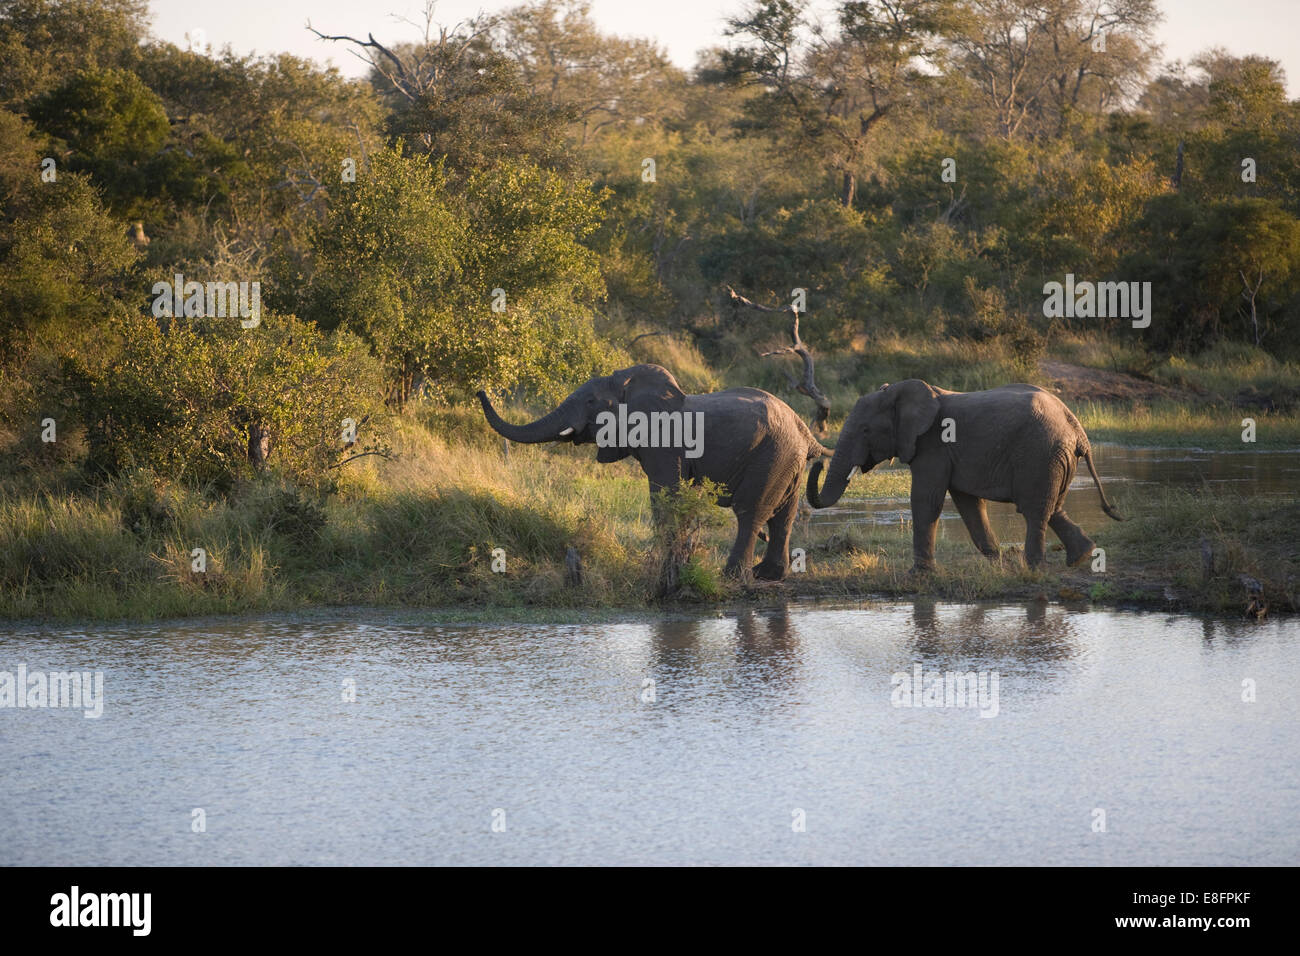 South Africa, Two elephants by waterhole Stock Photo